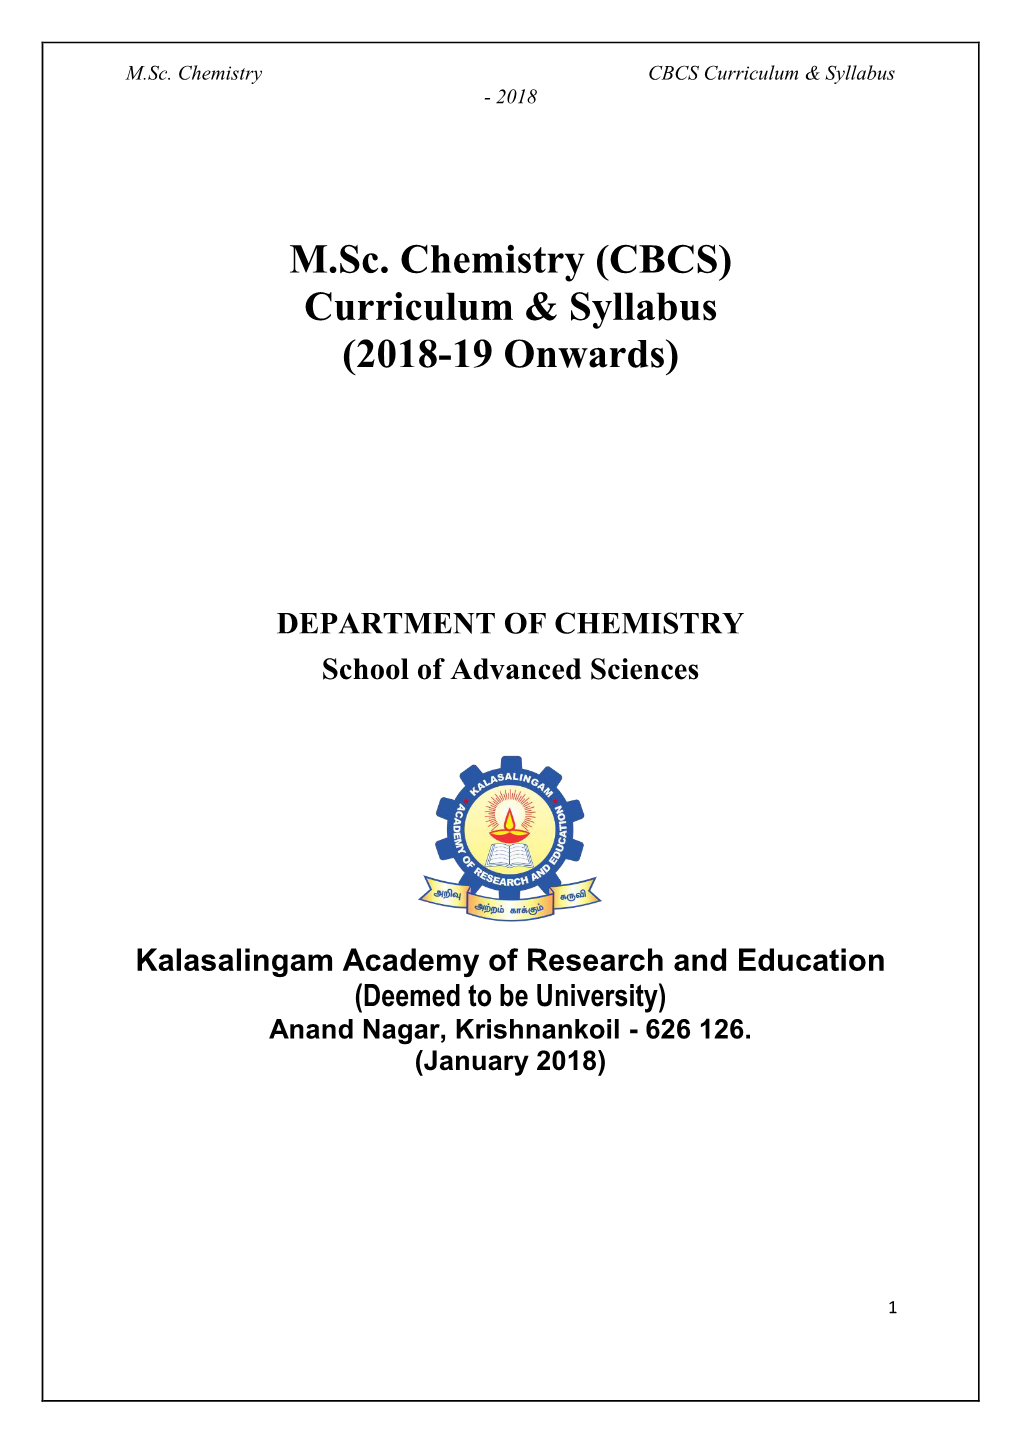 M.Sc. Chemistry (CBCS) Curriculum & Syllabus (2018-19 Onwards)